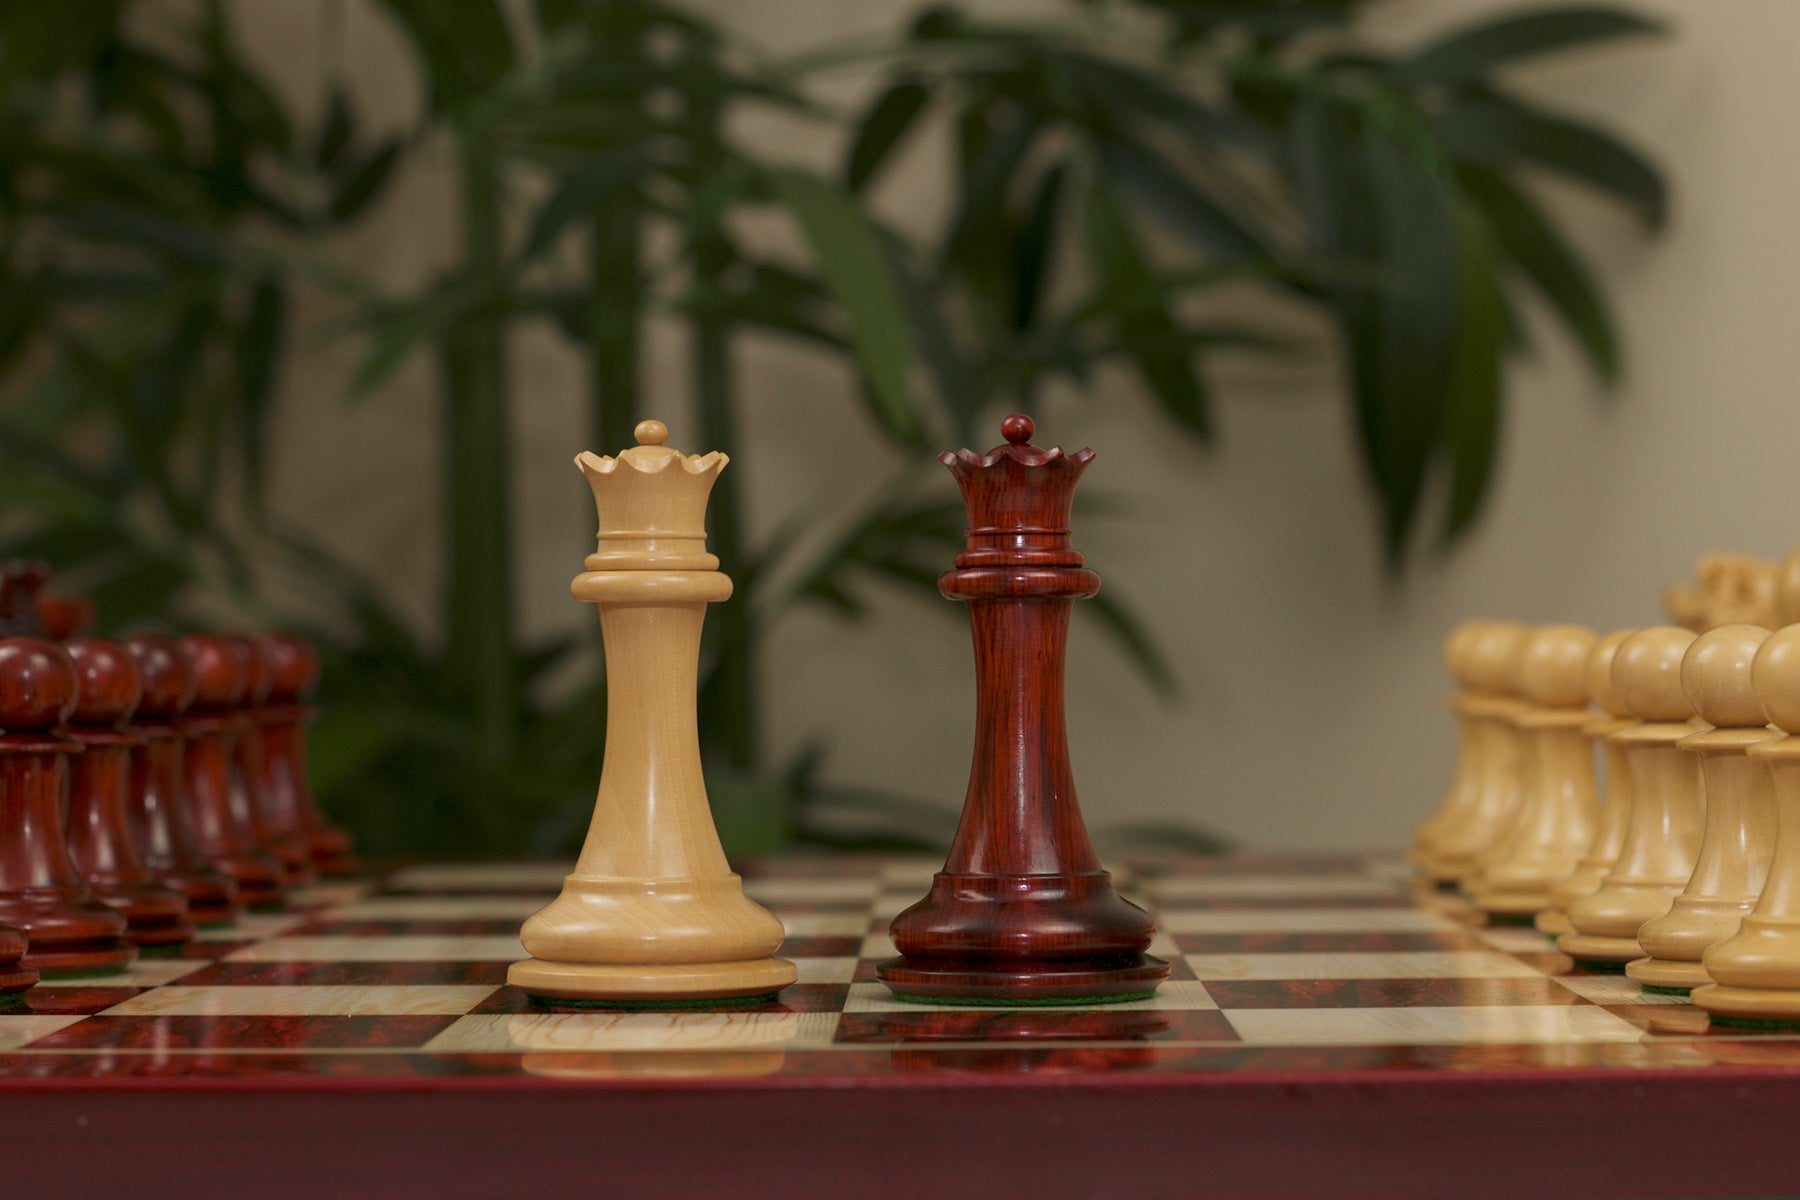 Kingly Luxury Chess Sets : royal chess set